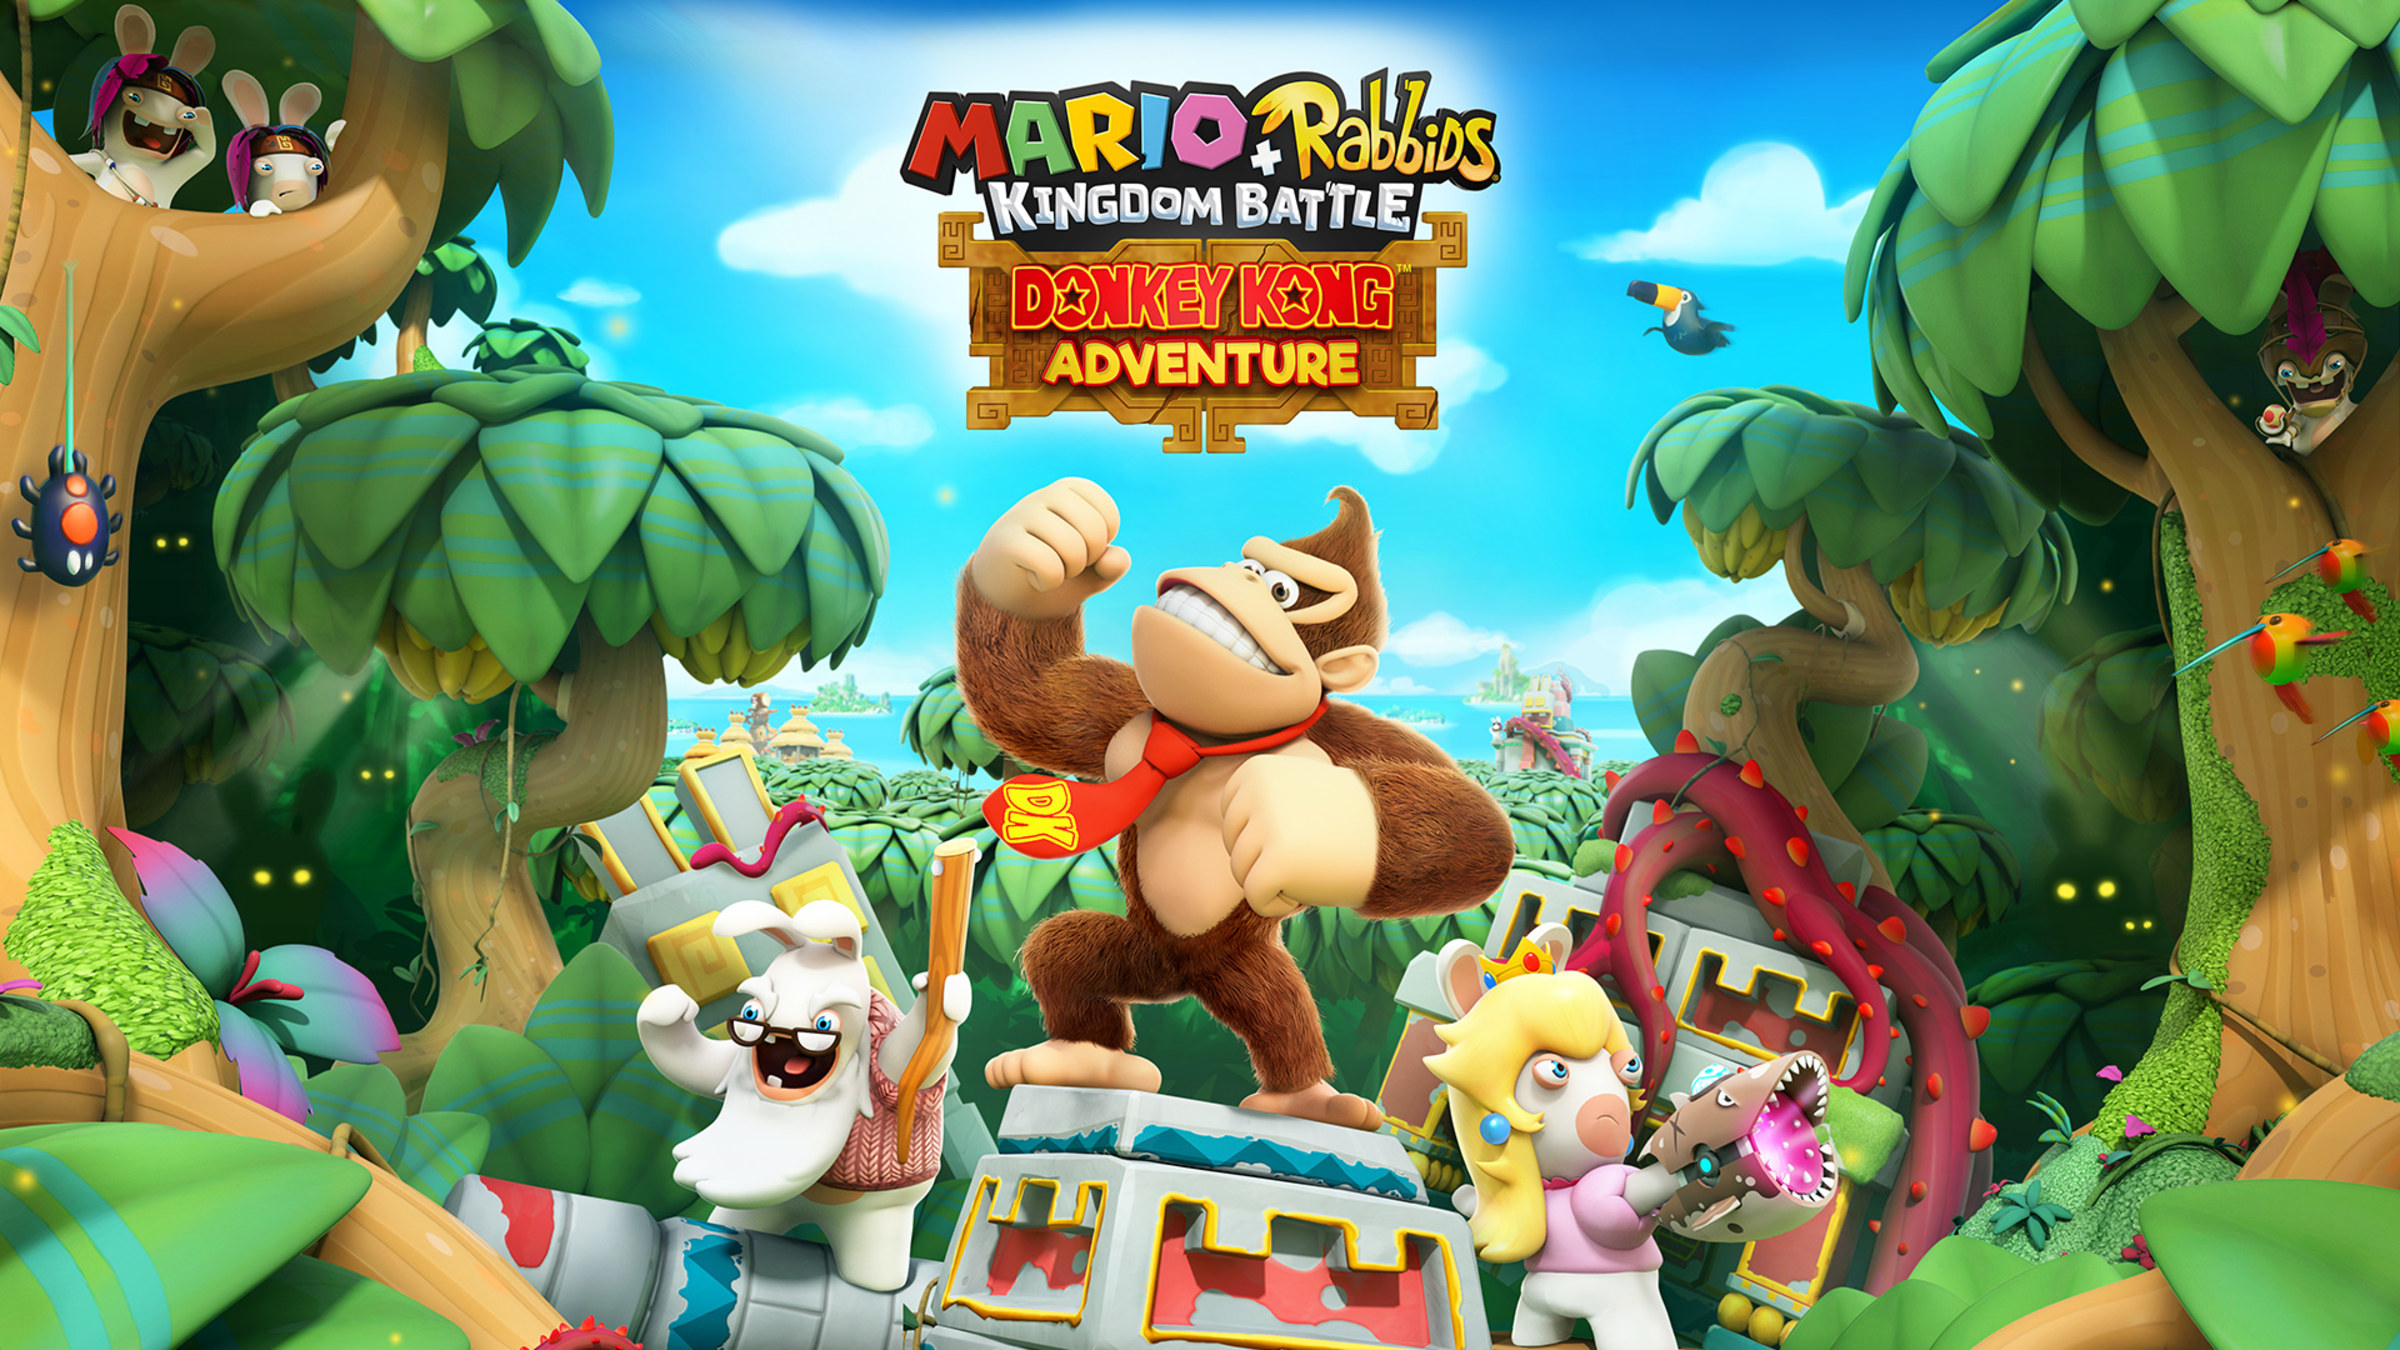 Mario + Rabbids® Kingdom Battle Donkey Kong Adventure for Nintendo Switch -  Nintendo Official Site